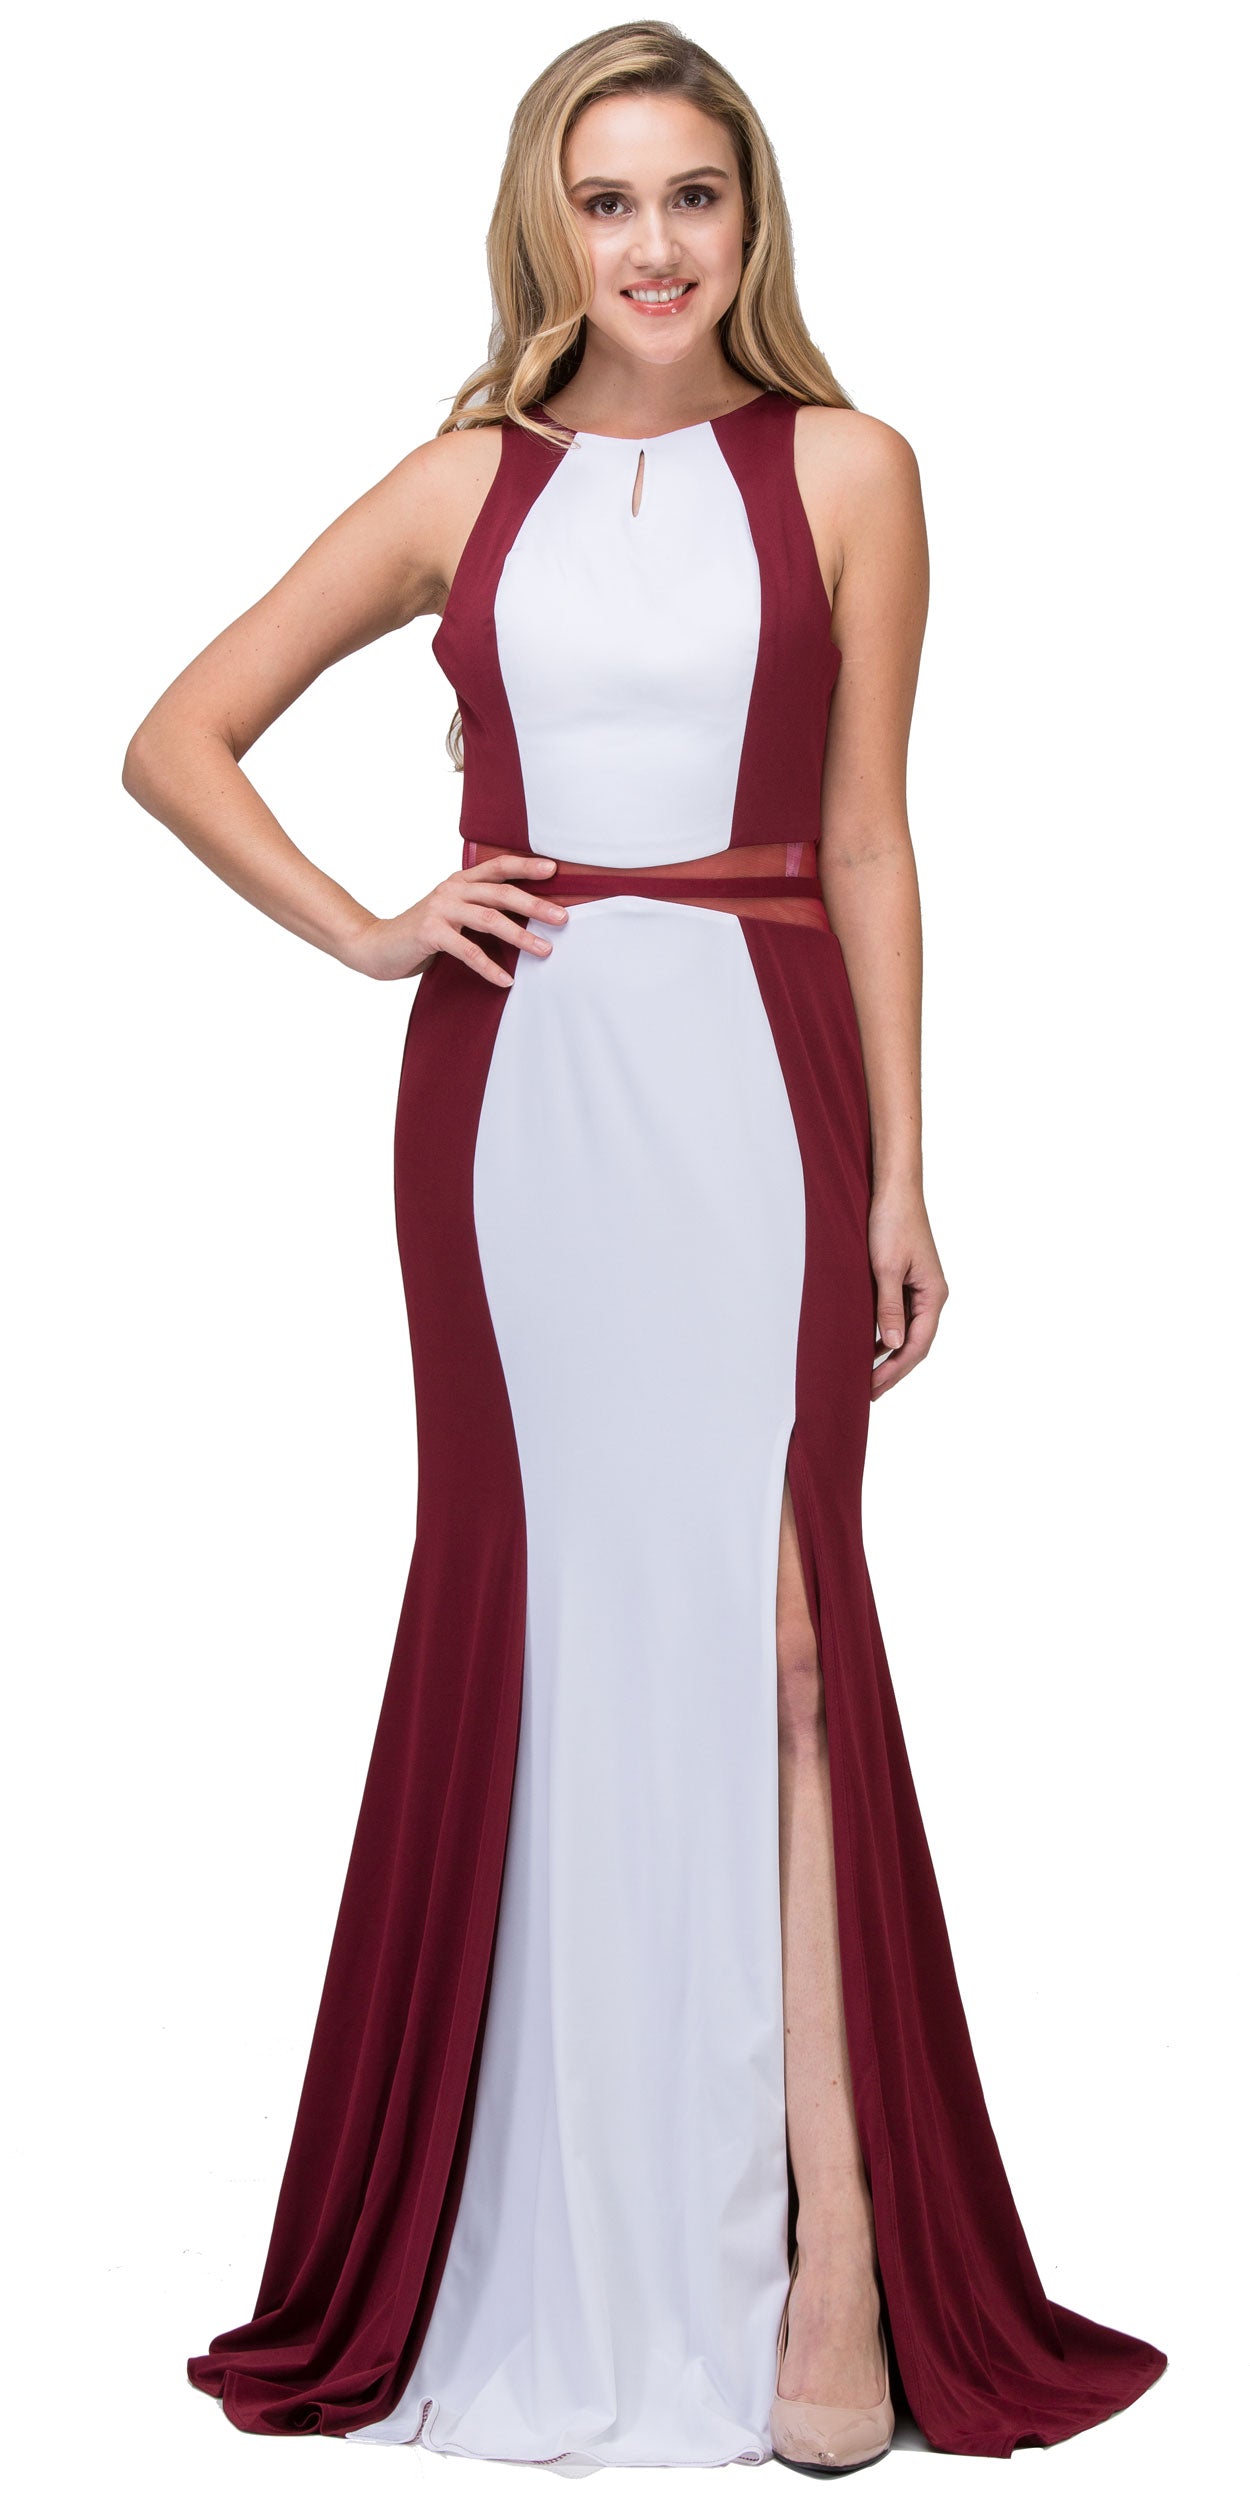 Image of High Neck Color Block Mesh Insert Long Formal Evening Dress in Burgundy/White